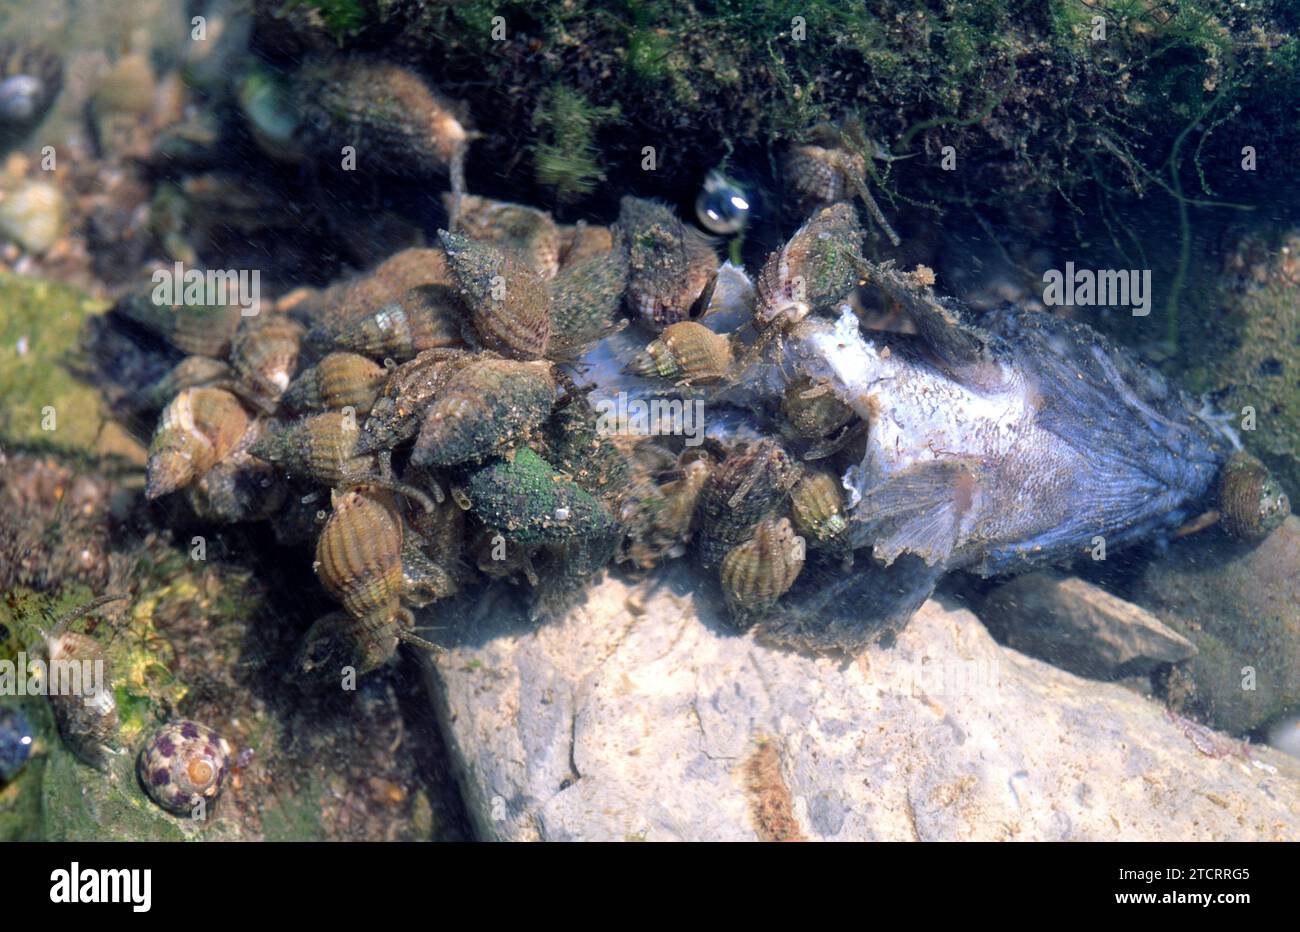 Thick-lipped dogwhelk (Hinia incrassata or Tritia incrassata) is a carnivorous marine snail. This photo was taken in Saint Jean de Luz coast, France. Stock Photo